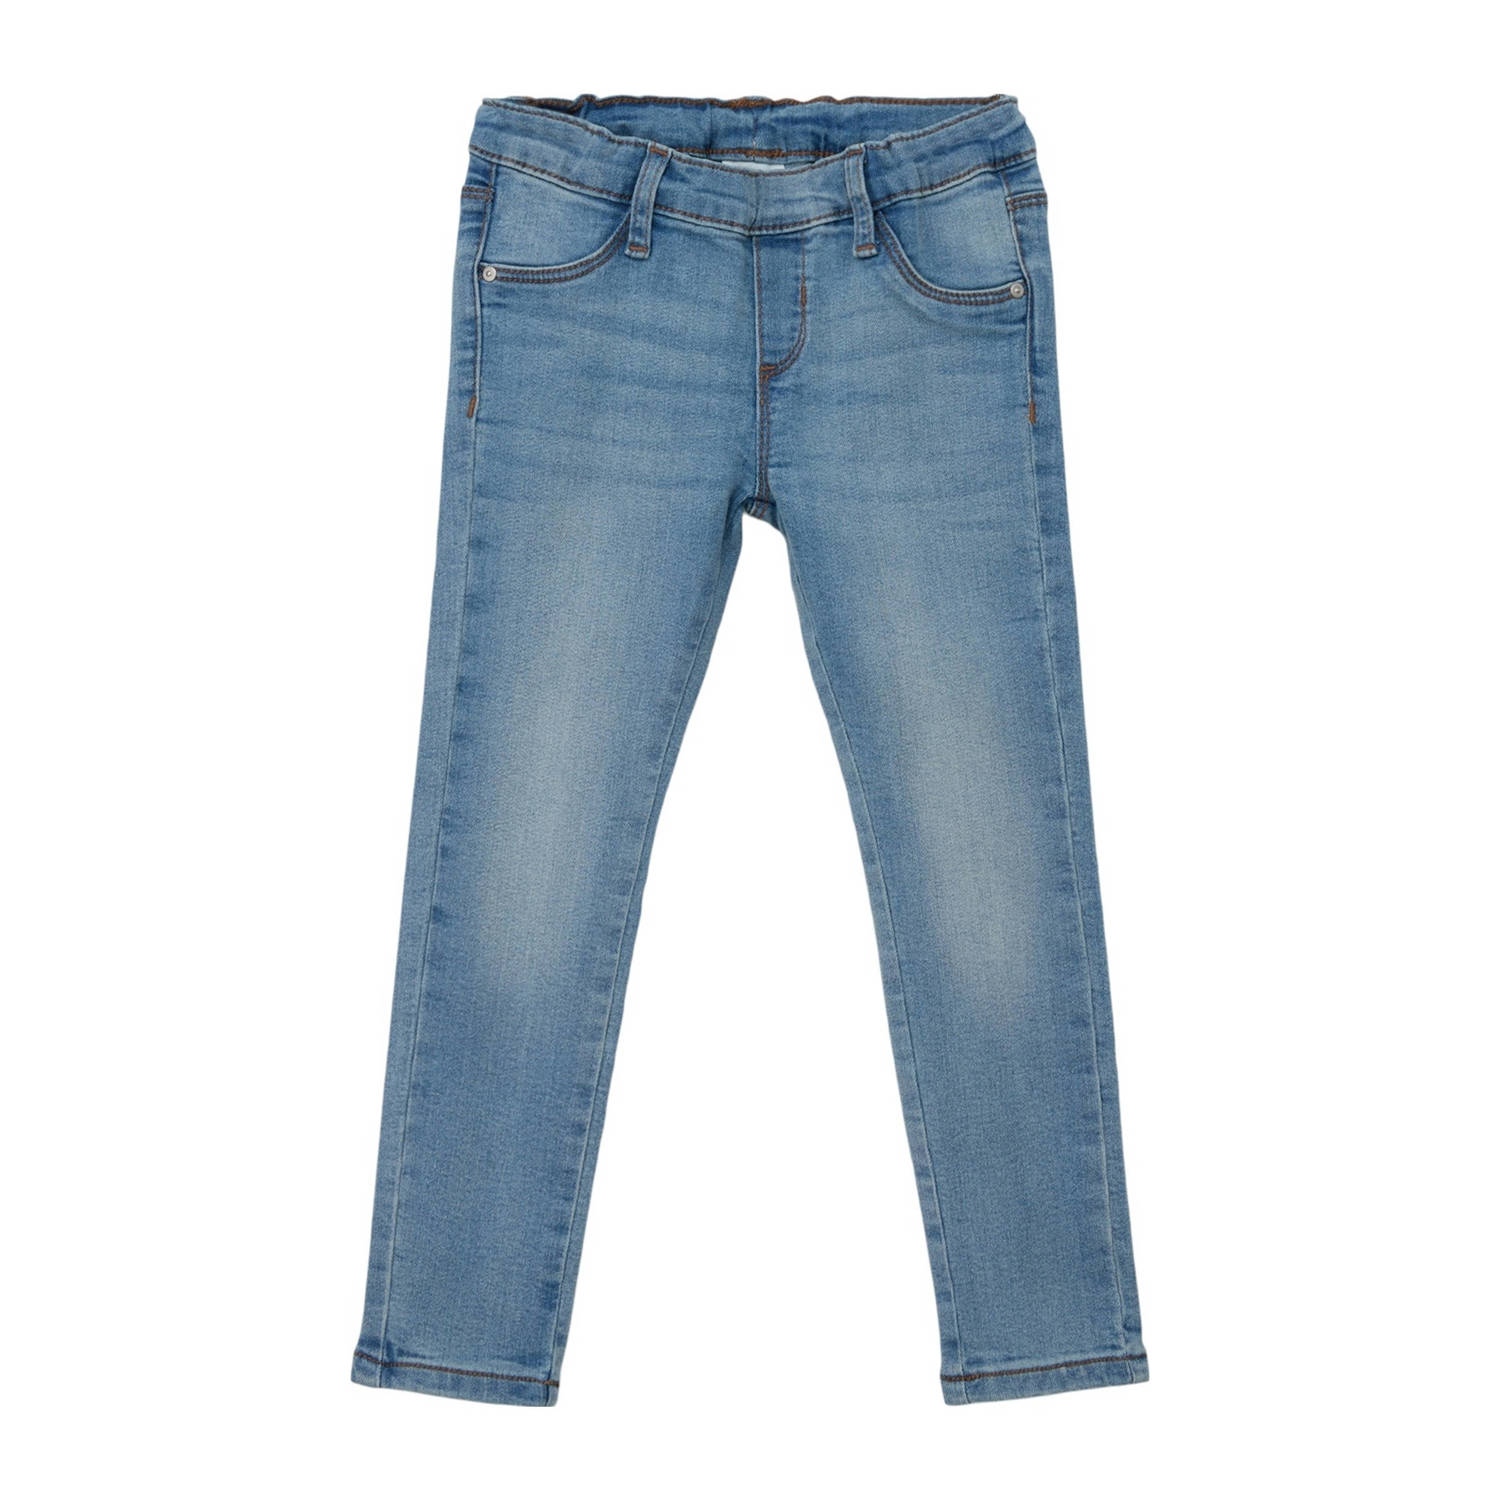 S.Oliver high rise skinny fit jegging Medium blue denim Jeans Blauw 104